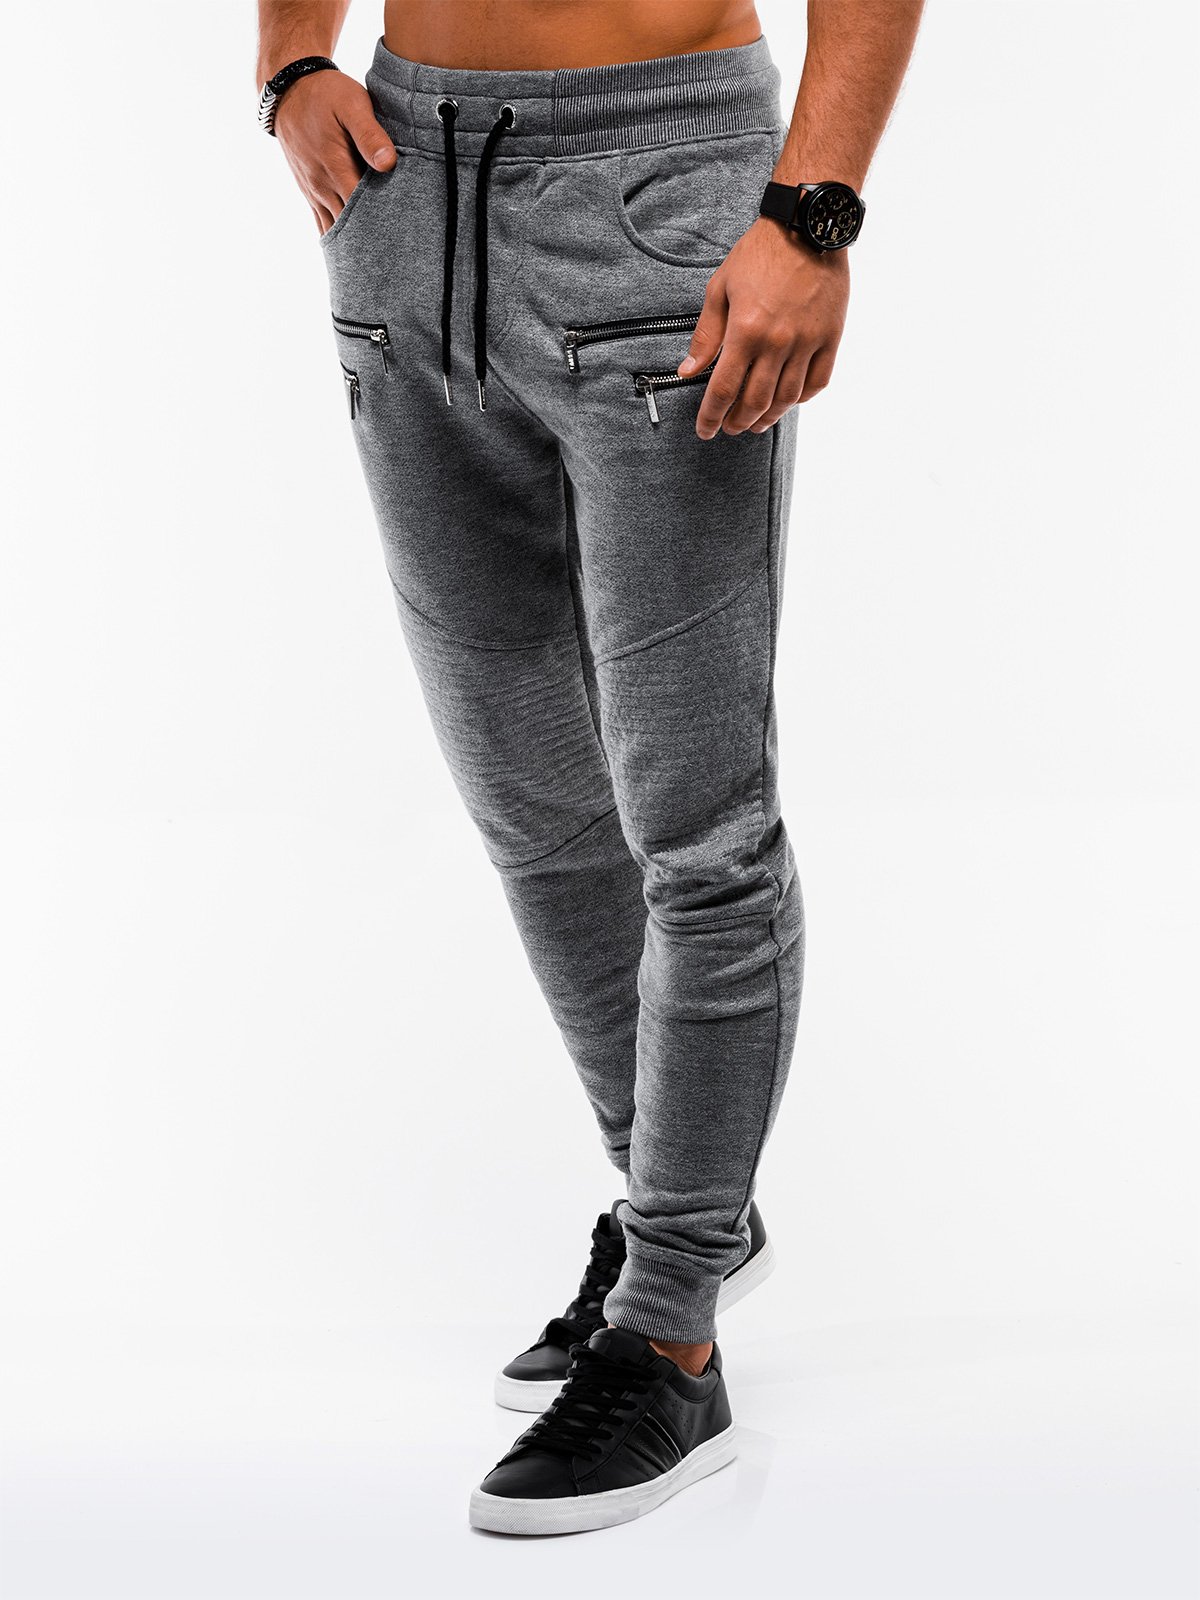 Men's sweatpants P422 - dark grey/melange | MODONE wholesale - Clothing ...